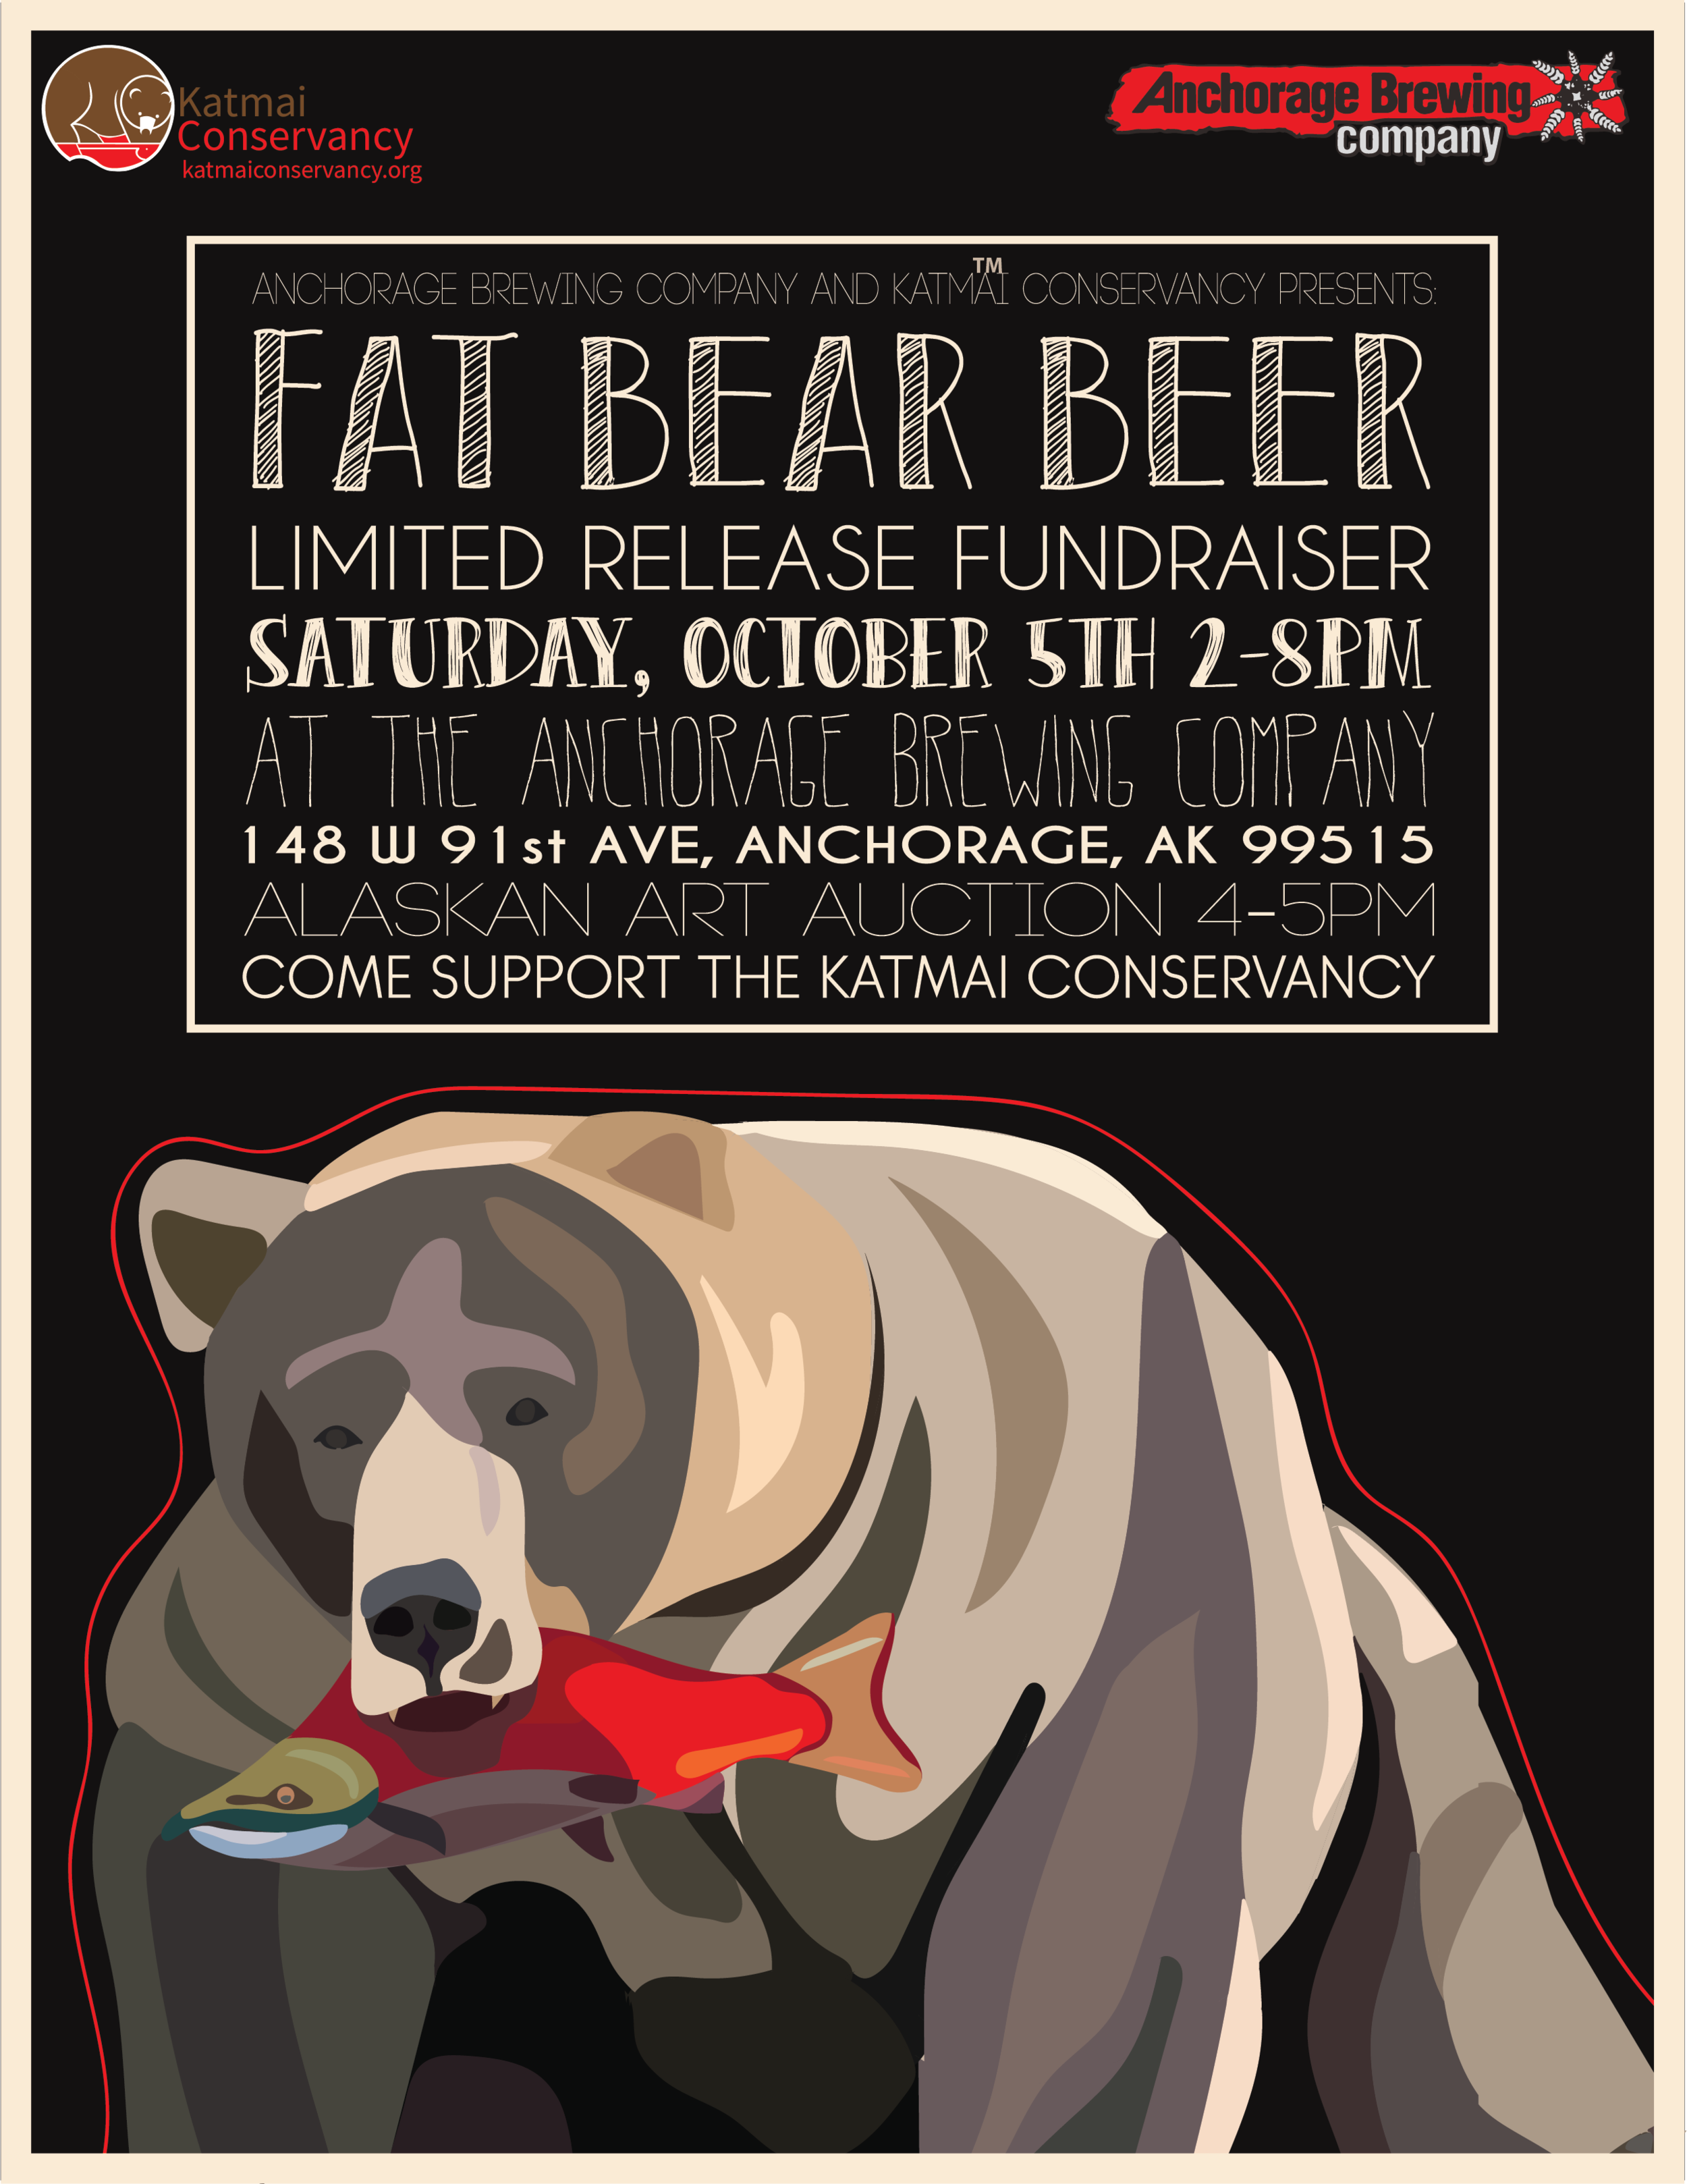 fat bear beer flyer.png